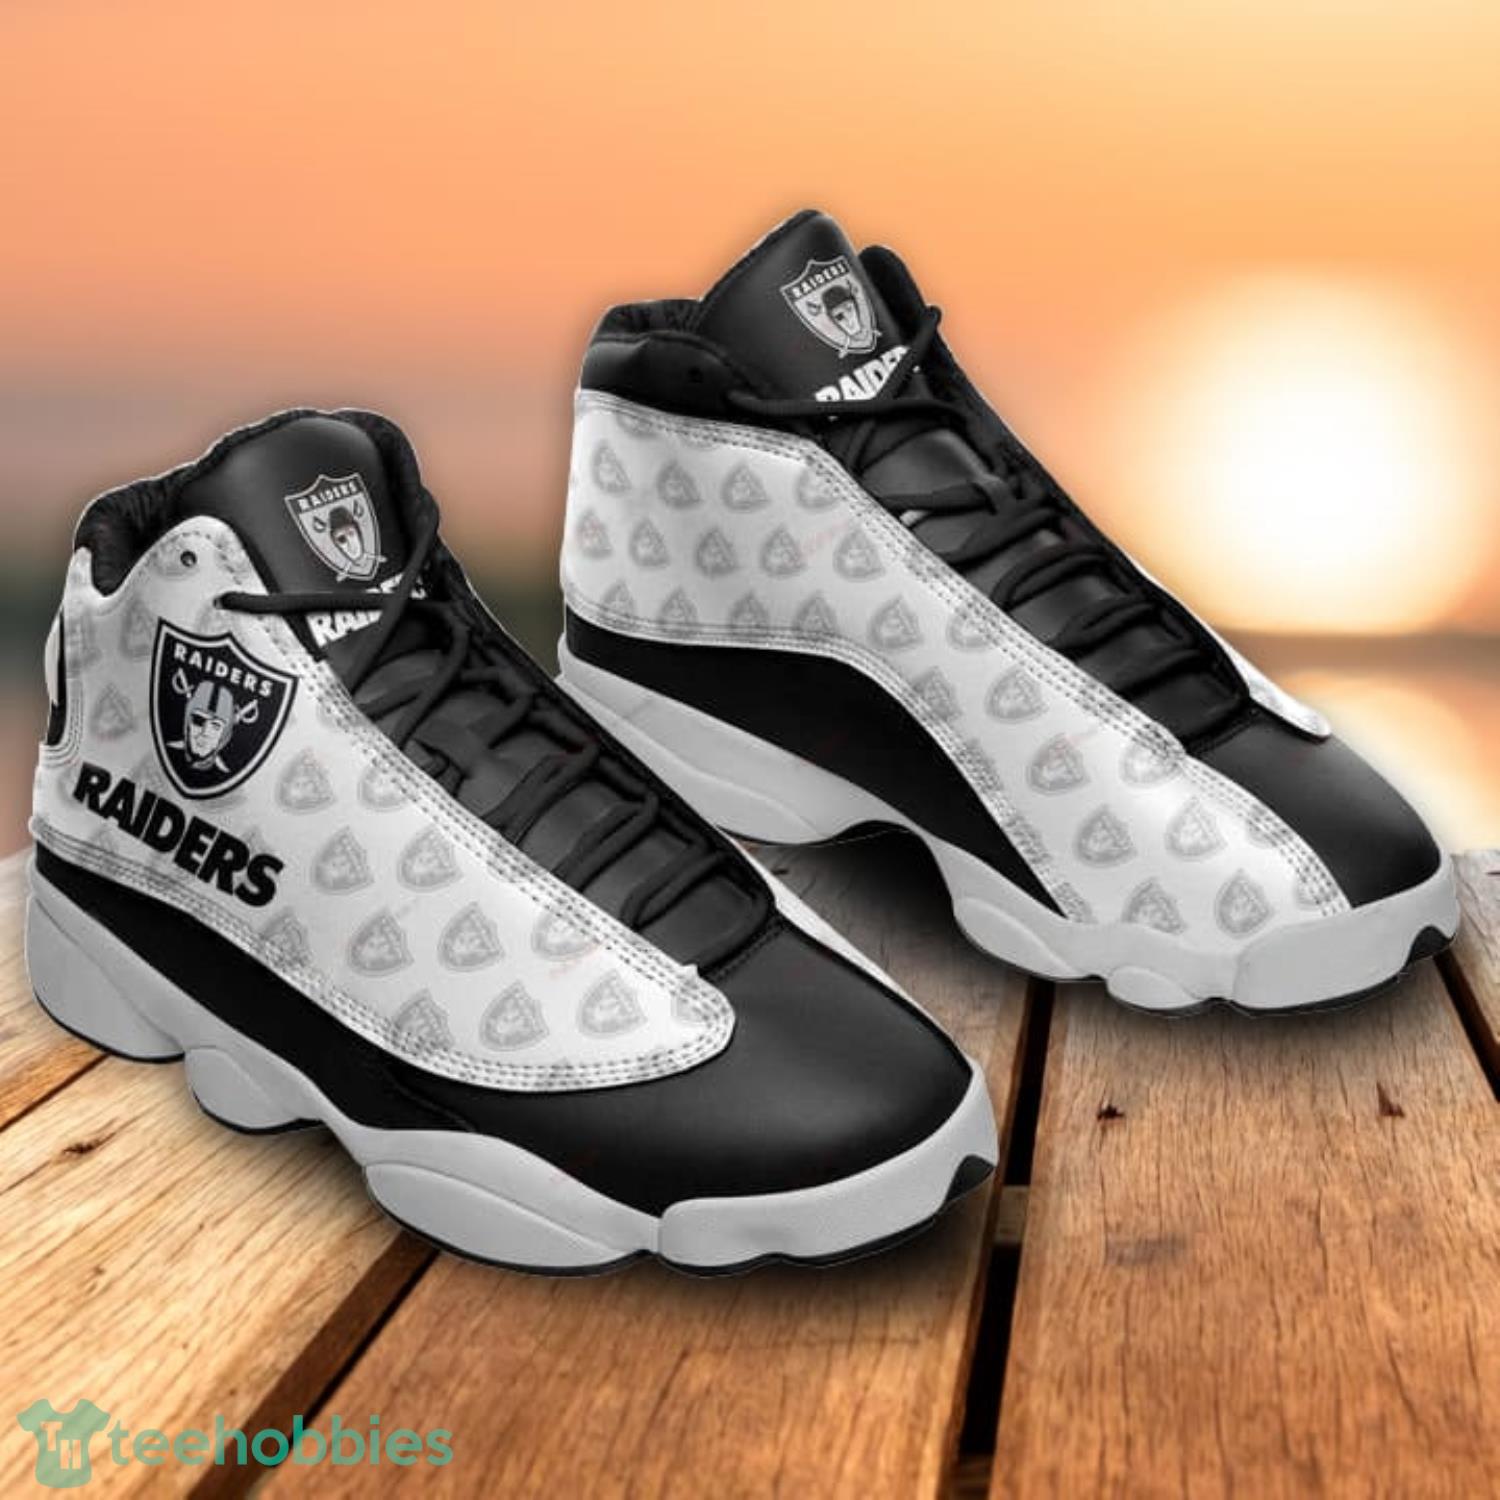 Las Vegas Raiders Team Air Jordan 13 Shoes Custom Sneakers Product Photo 1